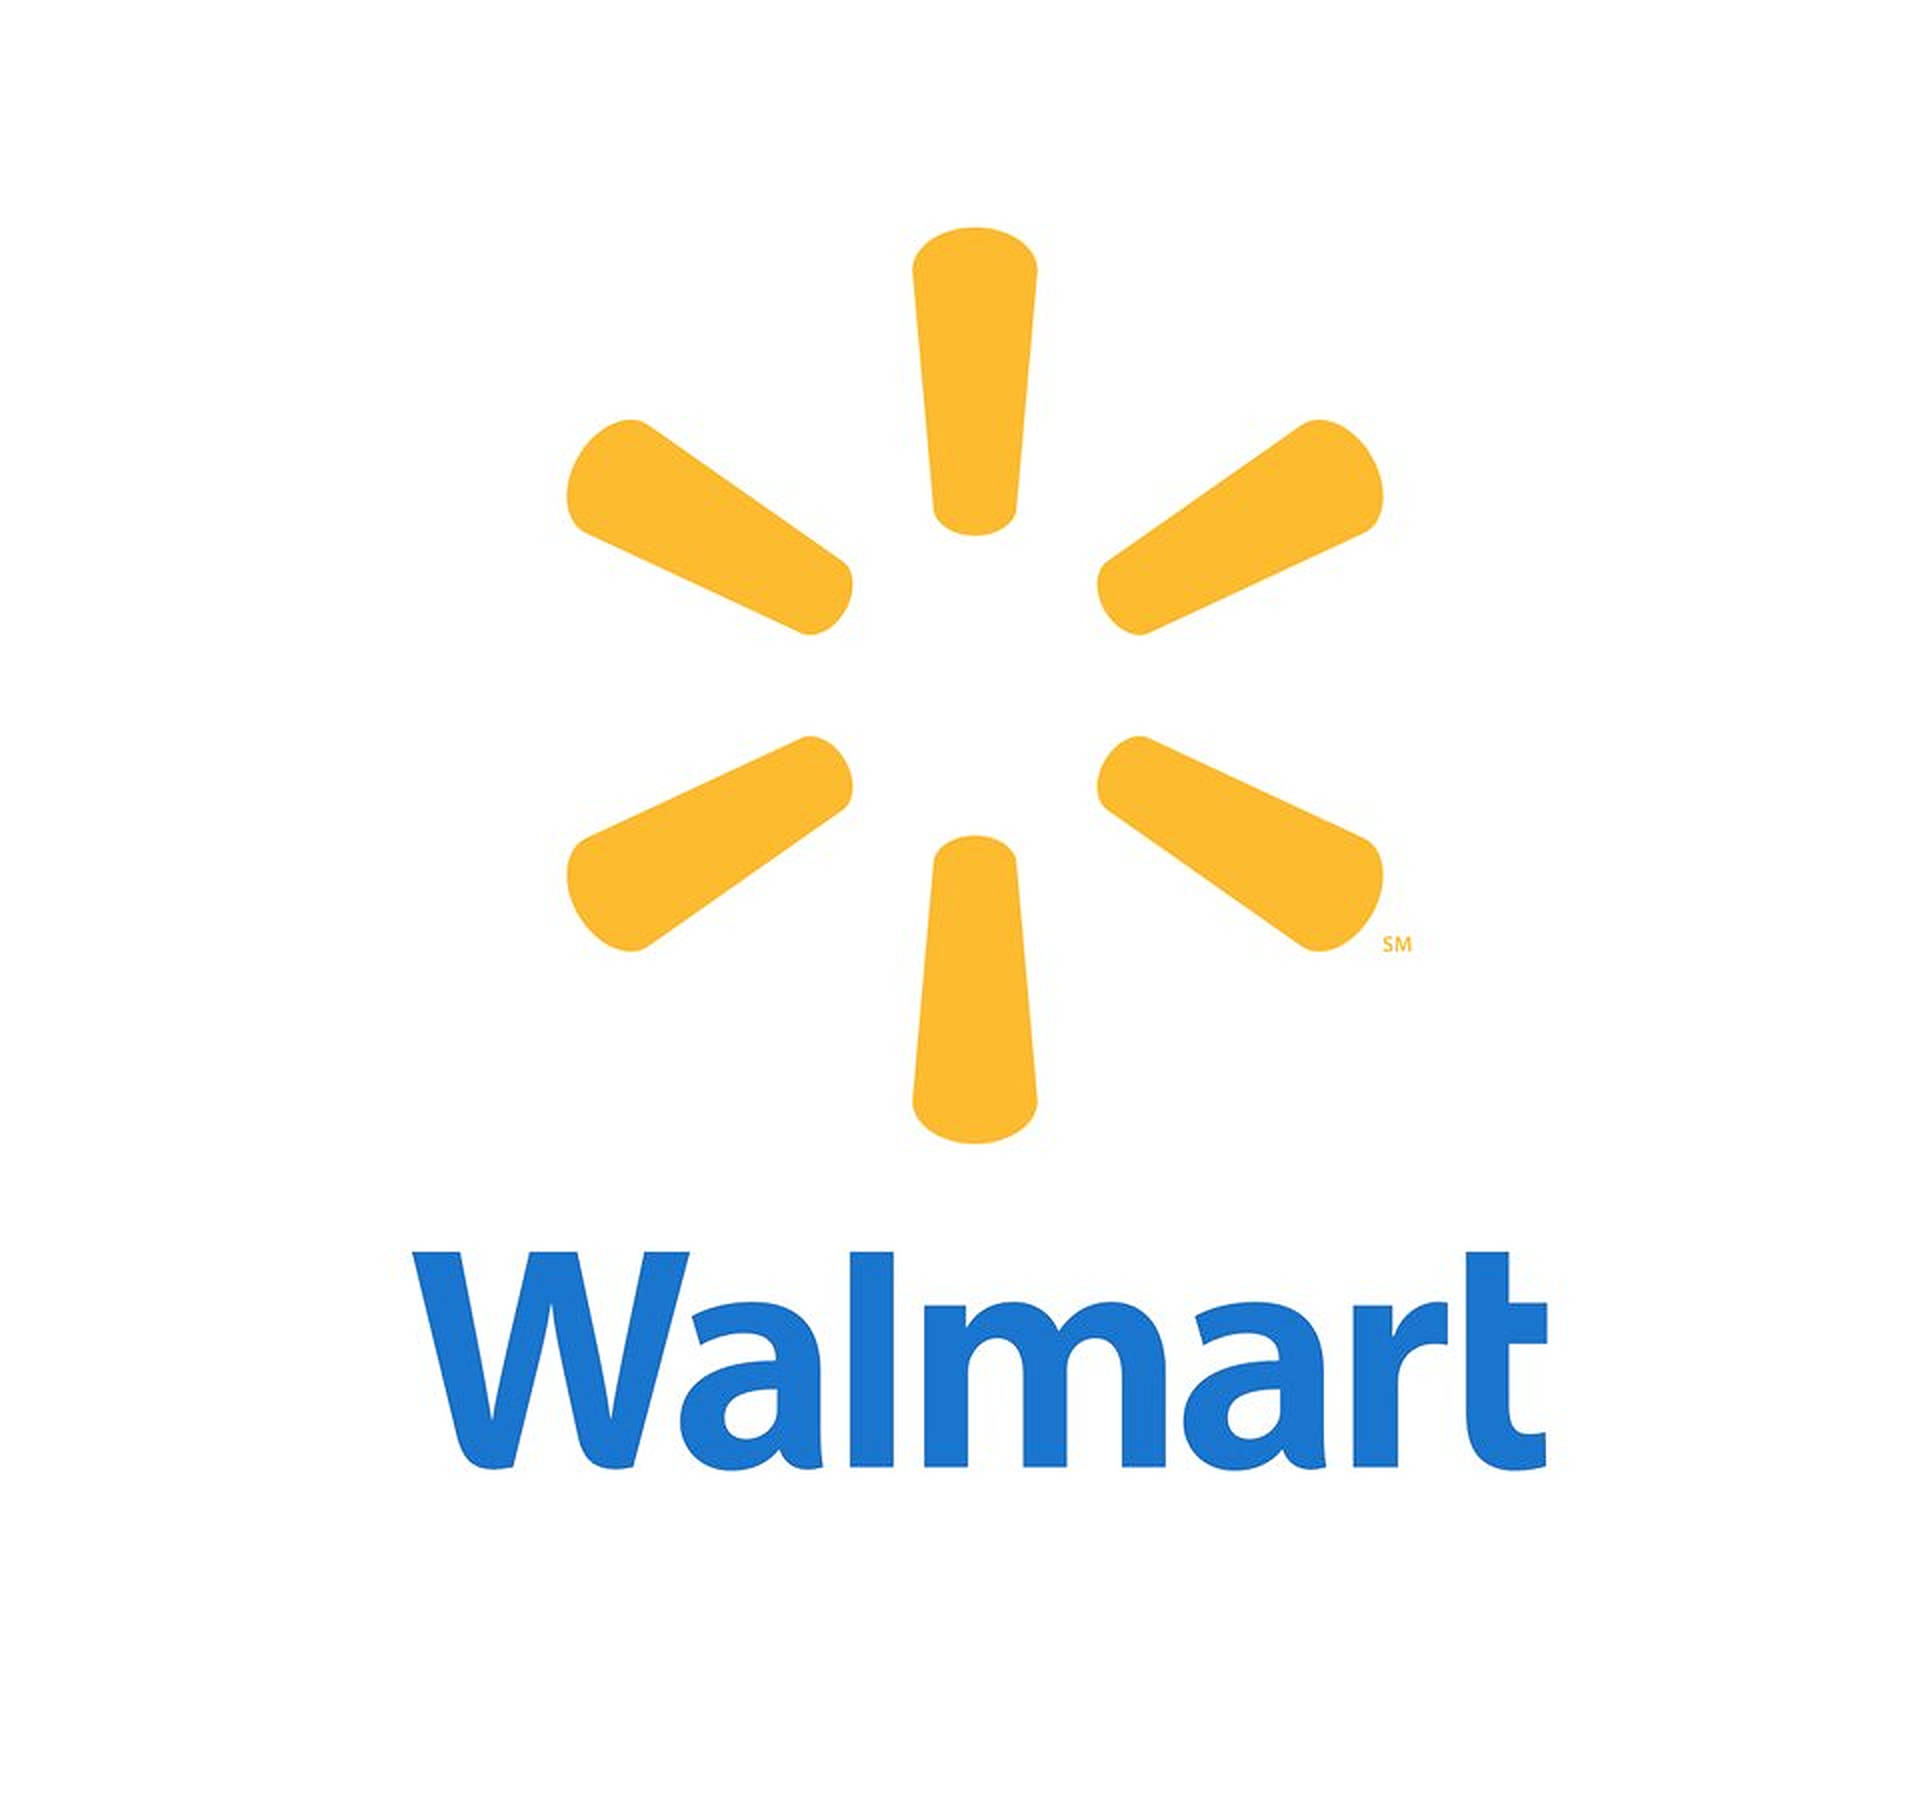 Walmart Retail Company